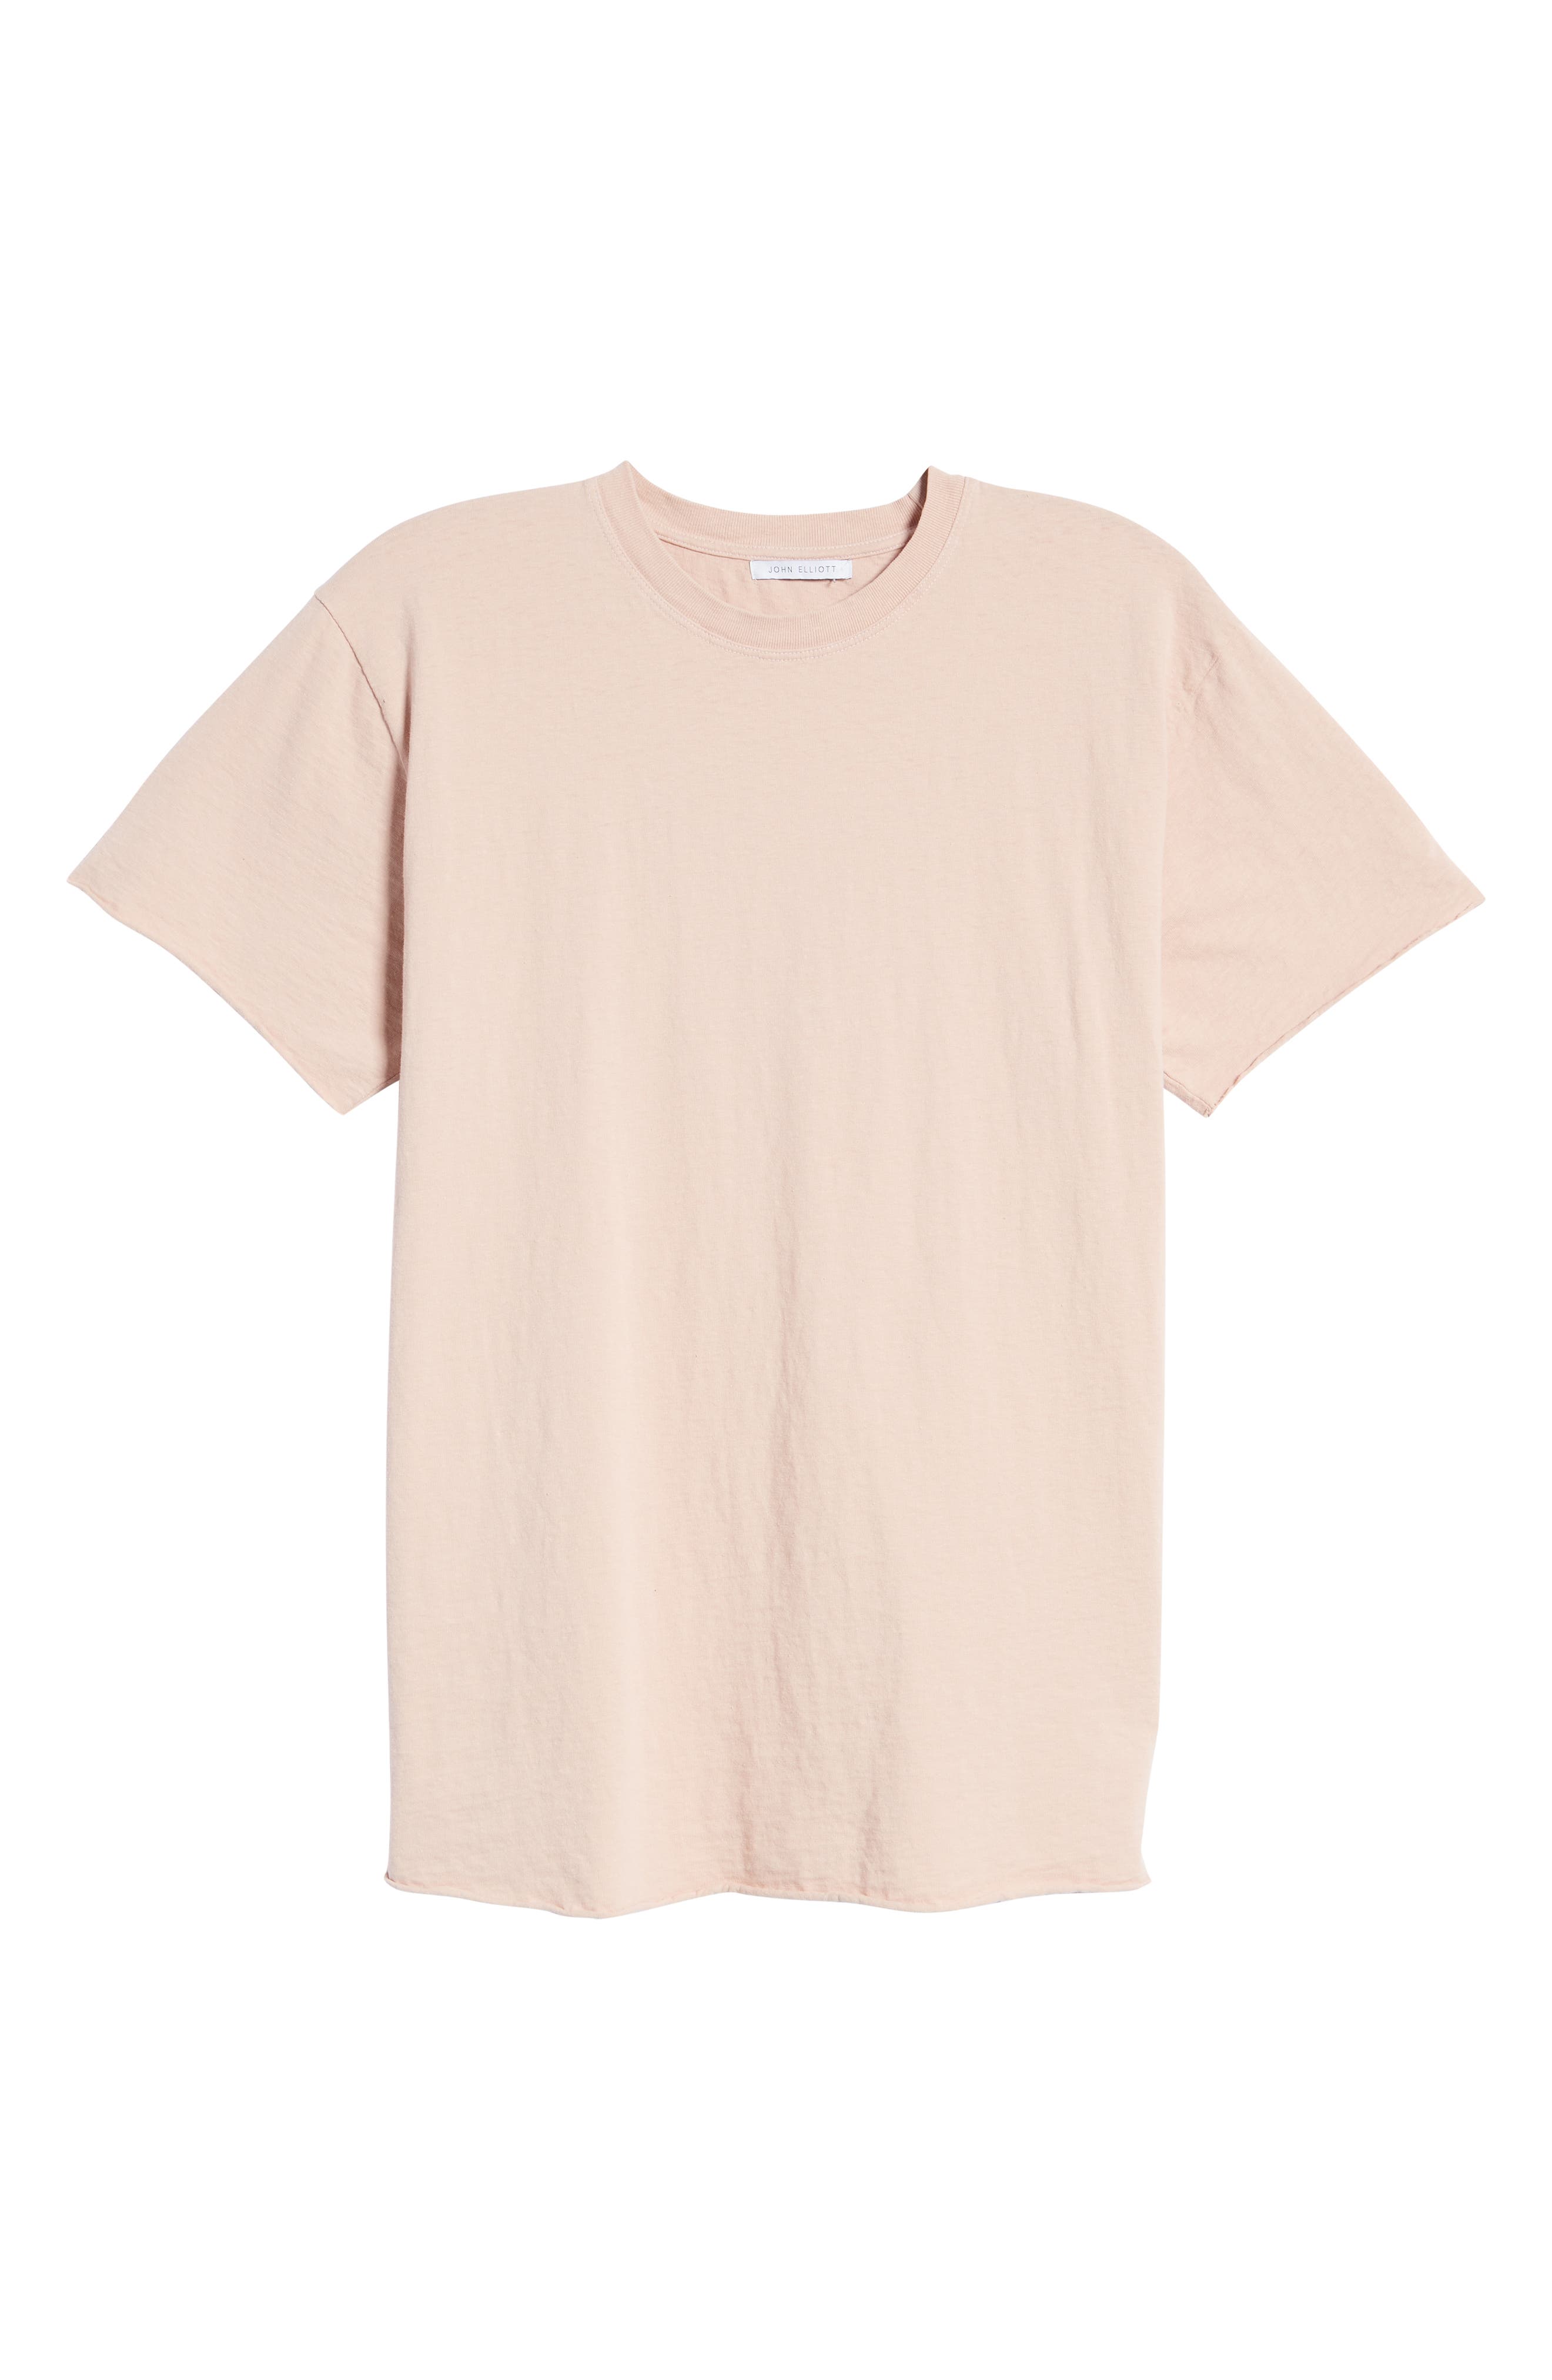 John Elliott Anti-Expo Cotton T-Shirt in Twilight at Nordstrom, Size Medium